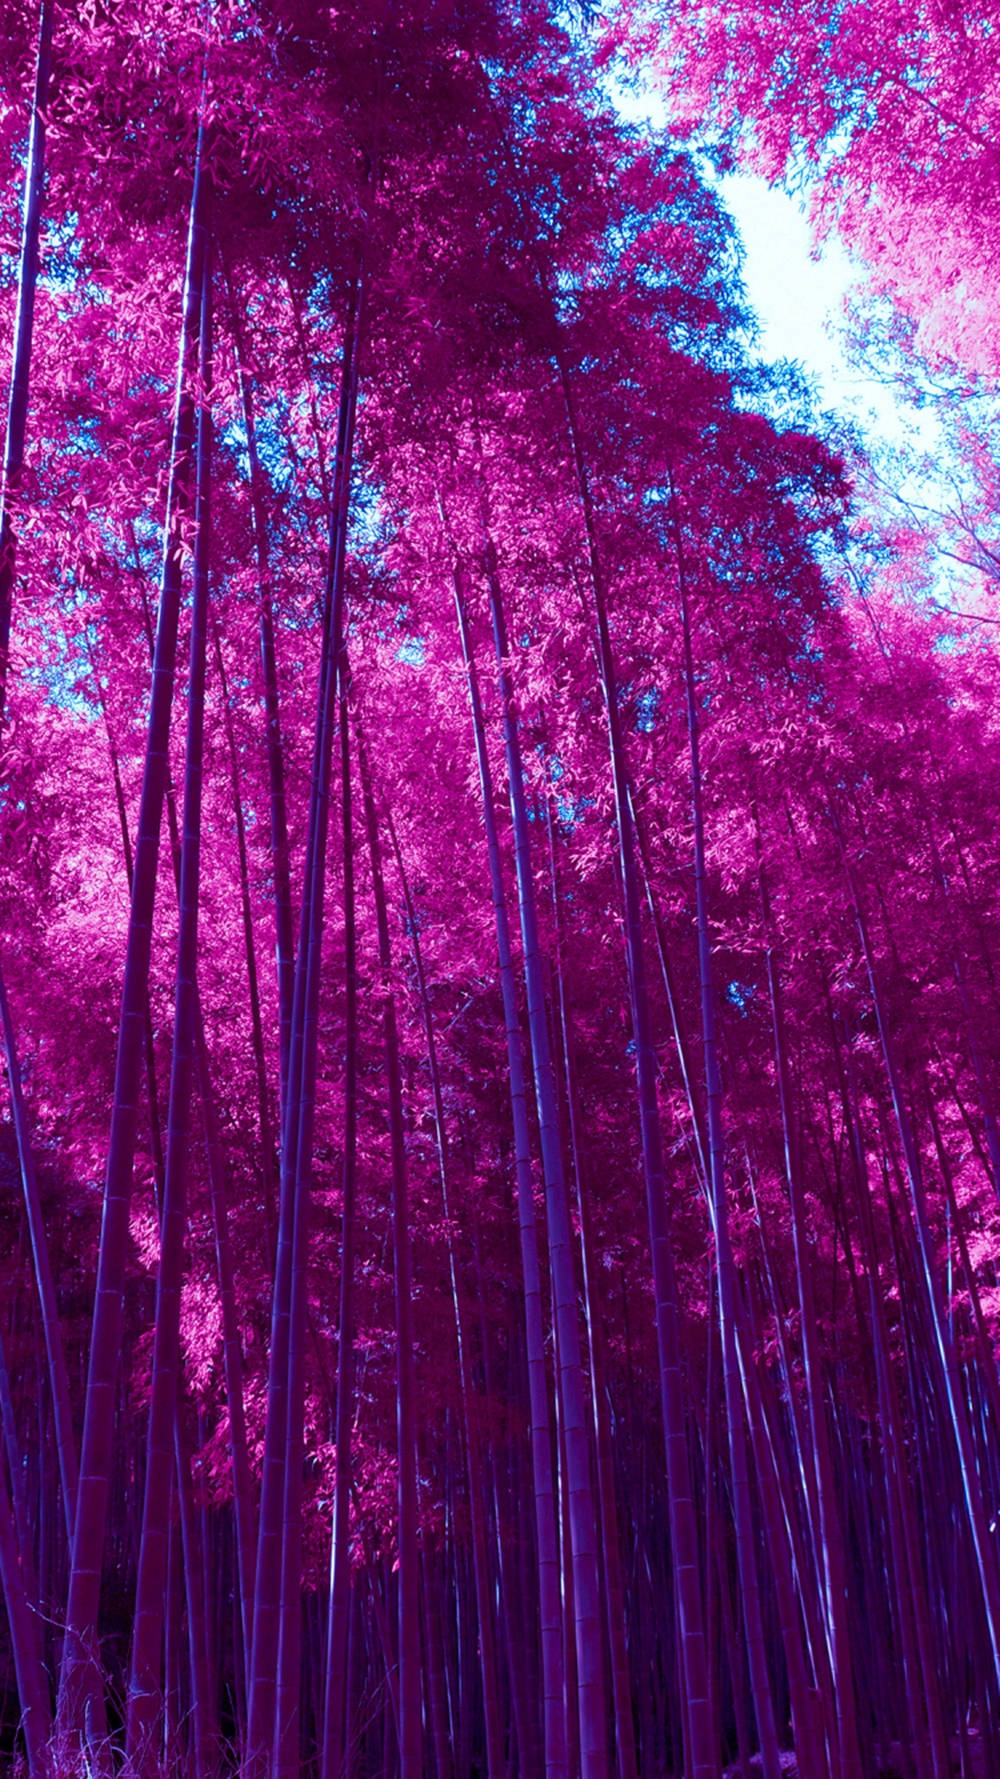 Pink Bamboo Grove IPhone Wallpaper